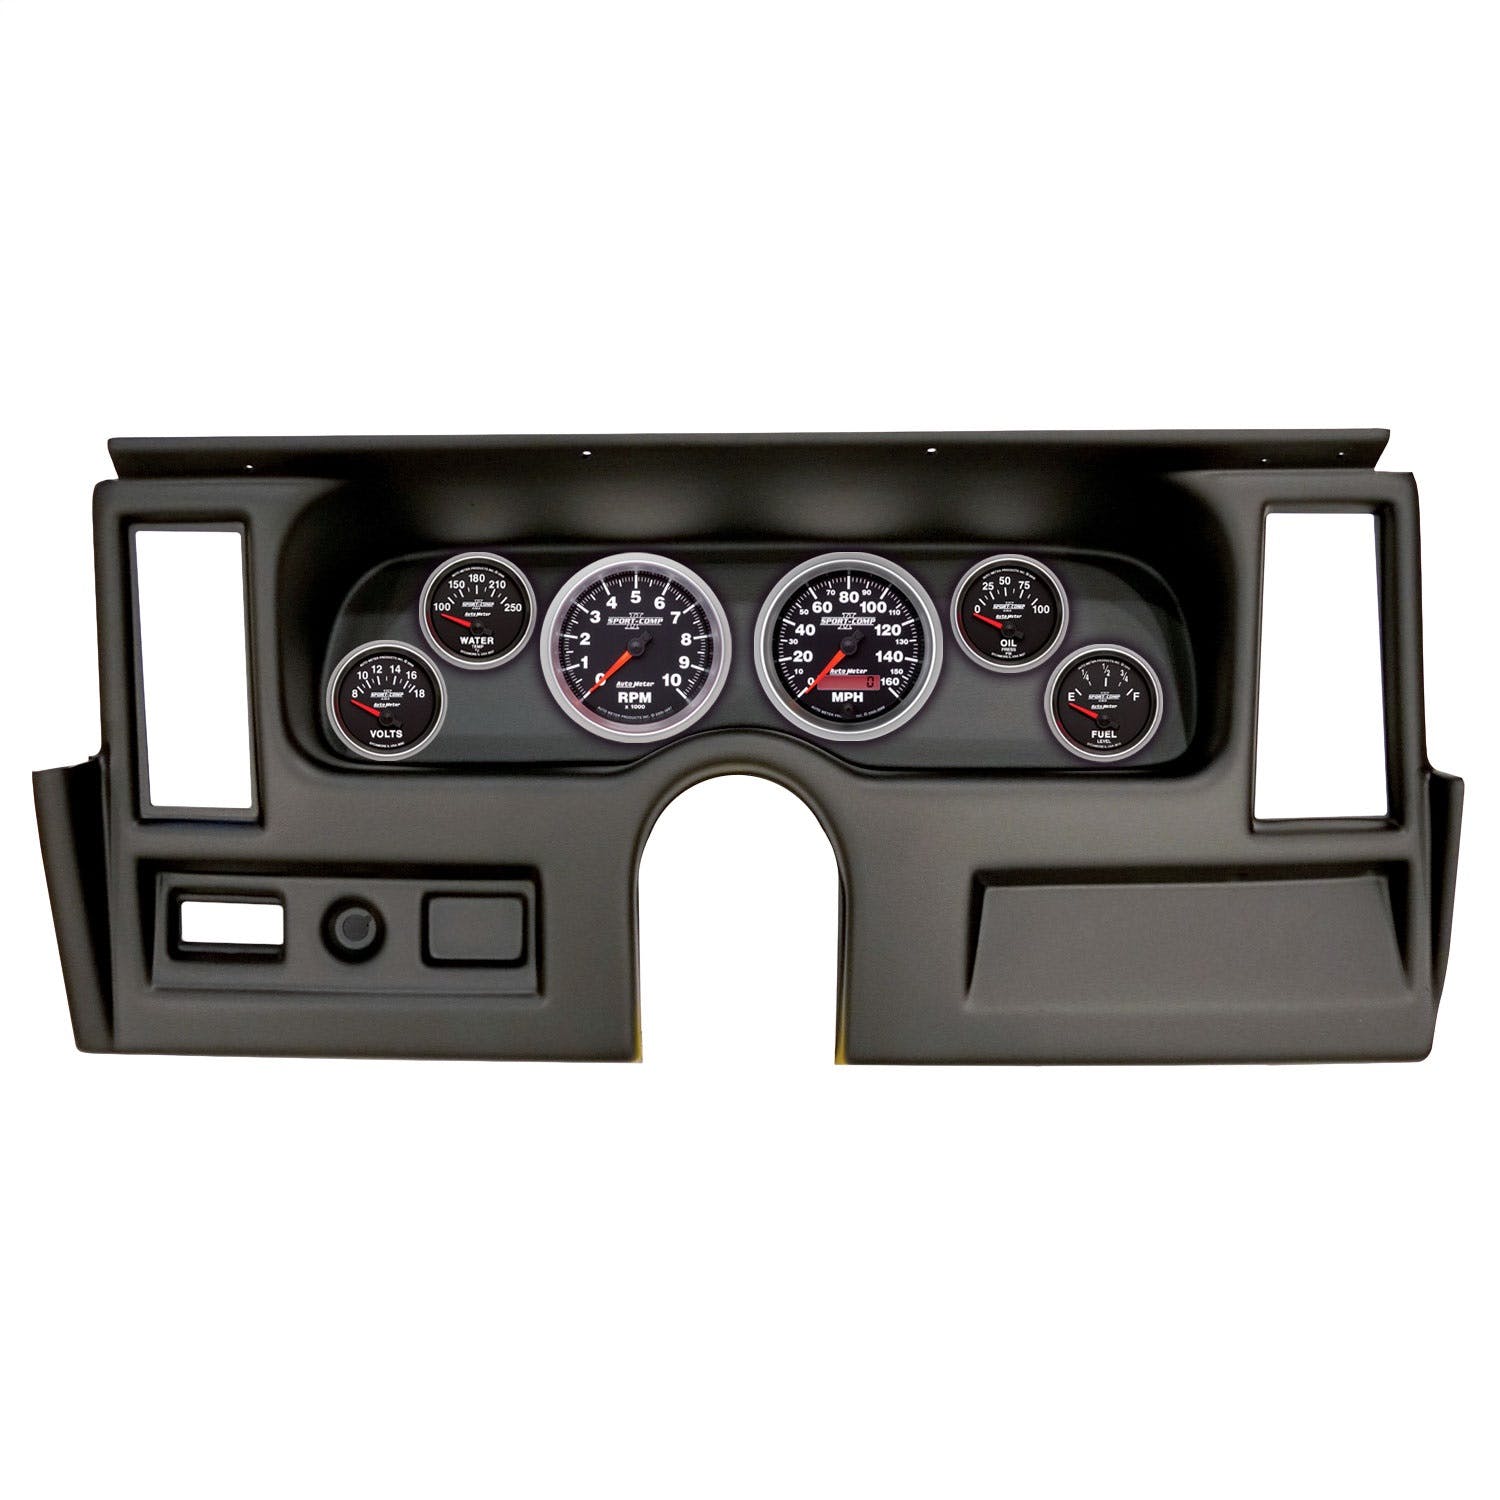 AutoMeter Products 2916-12 6 Gauge Direct-Fit Dash Kit, Chevy Nova 77-79, Sport-Comp II